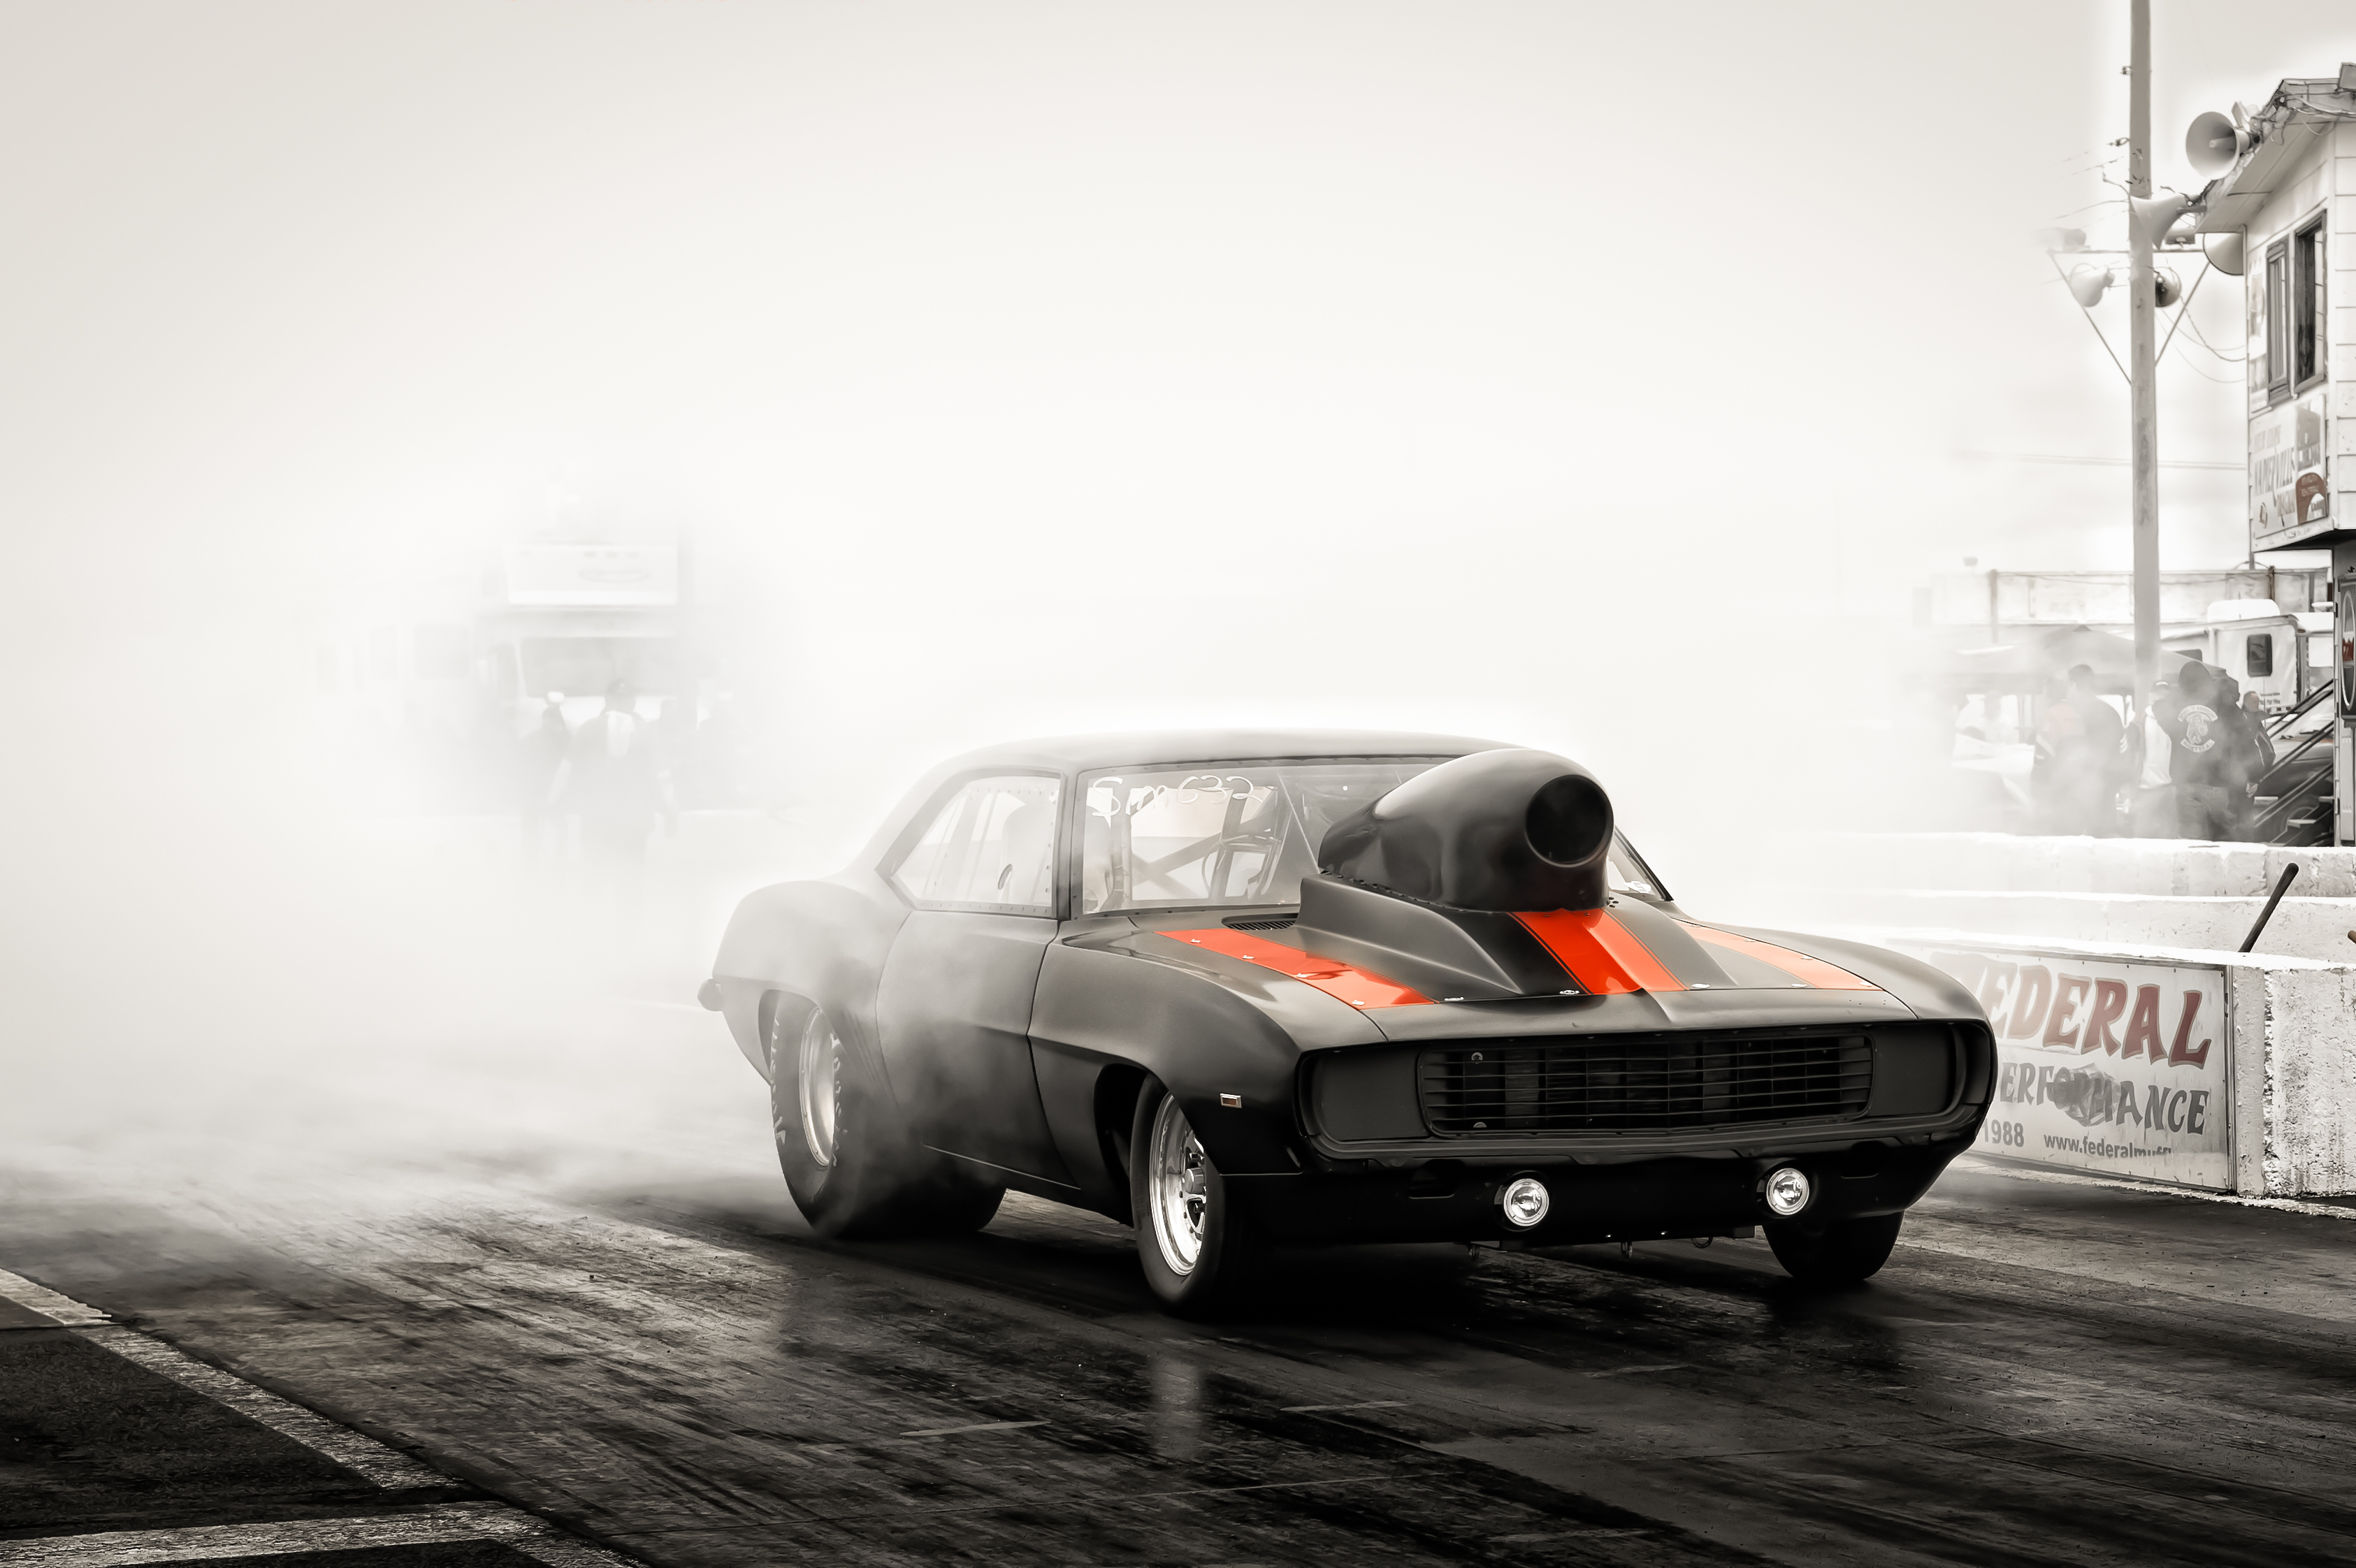 80 Free Drag Racing  Car Images  Pixabay